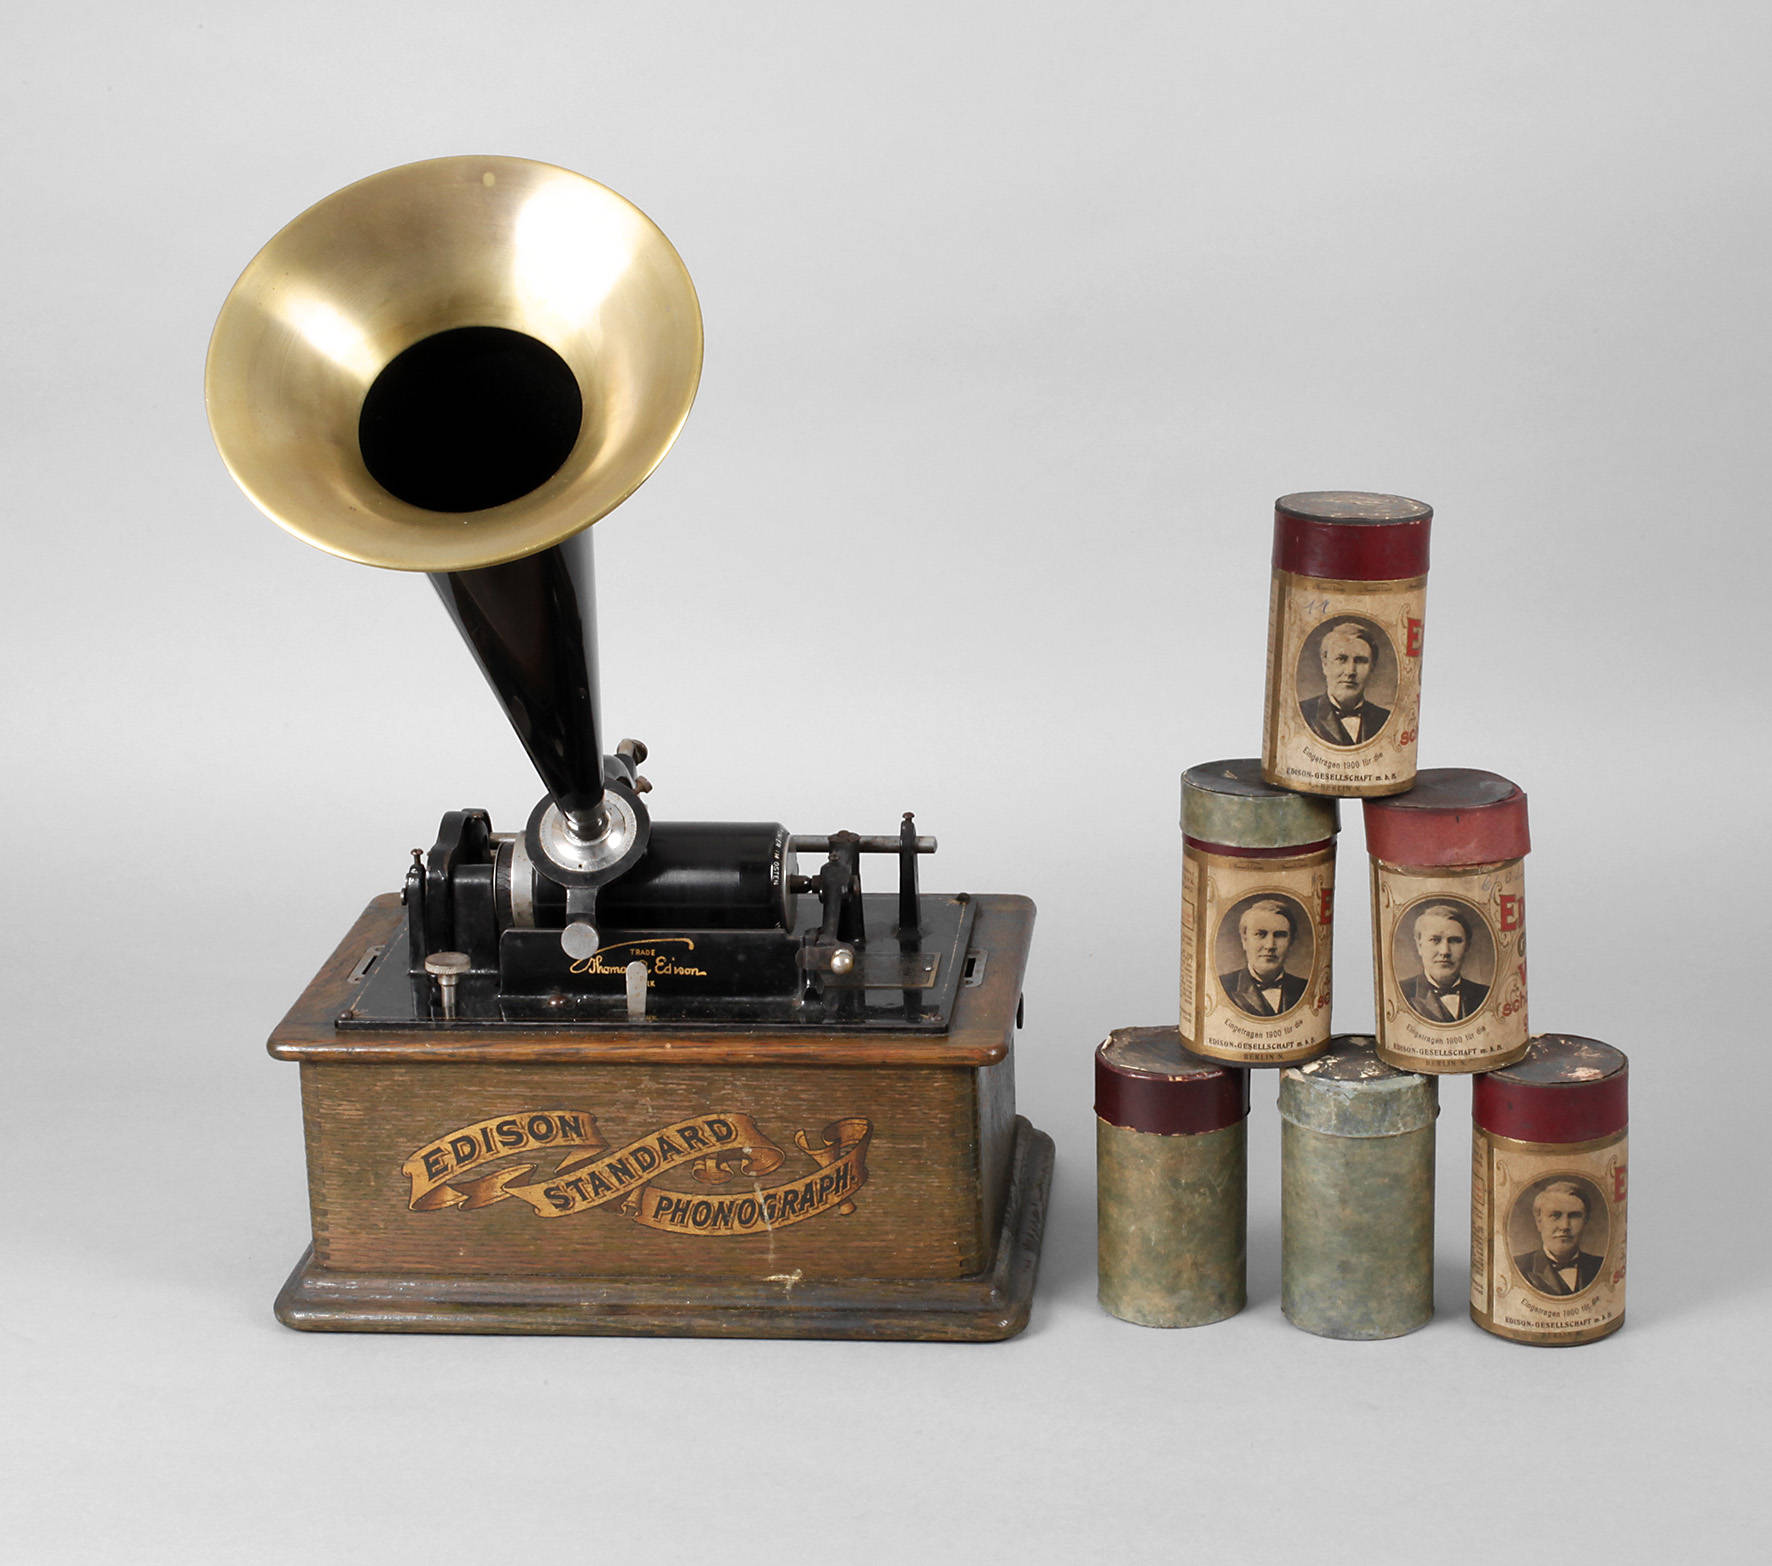 Edison Phonograf